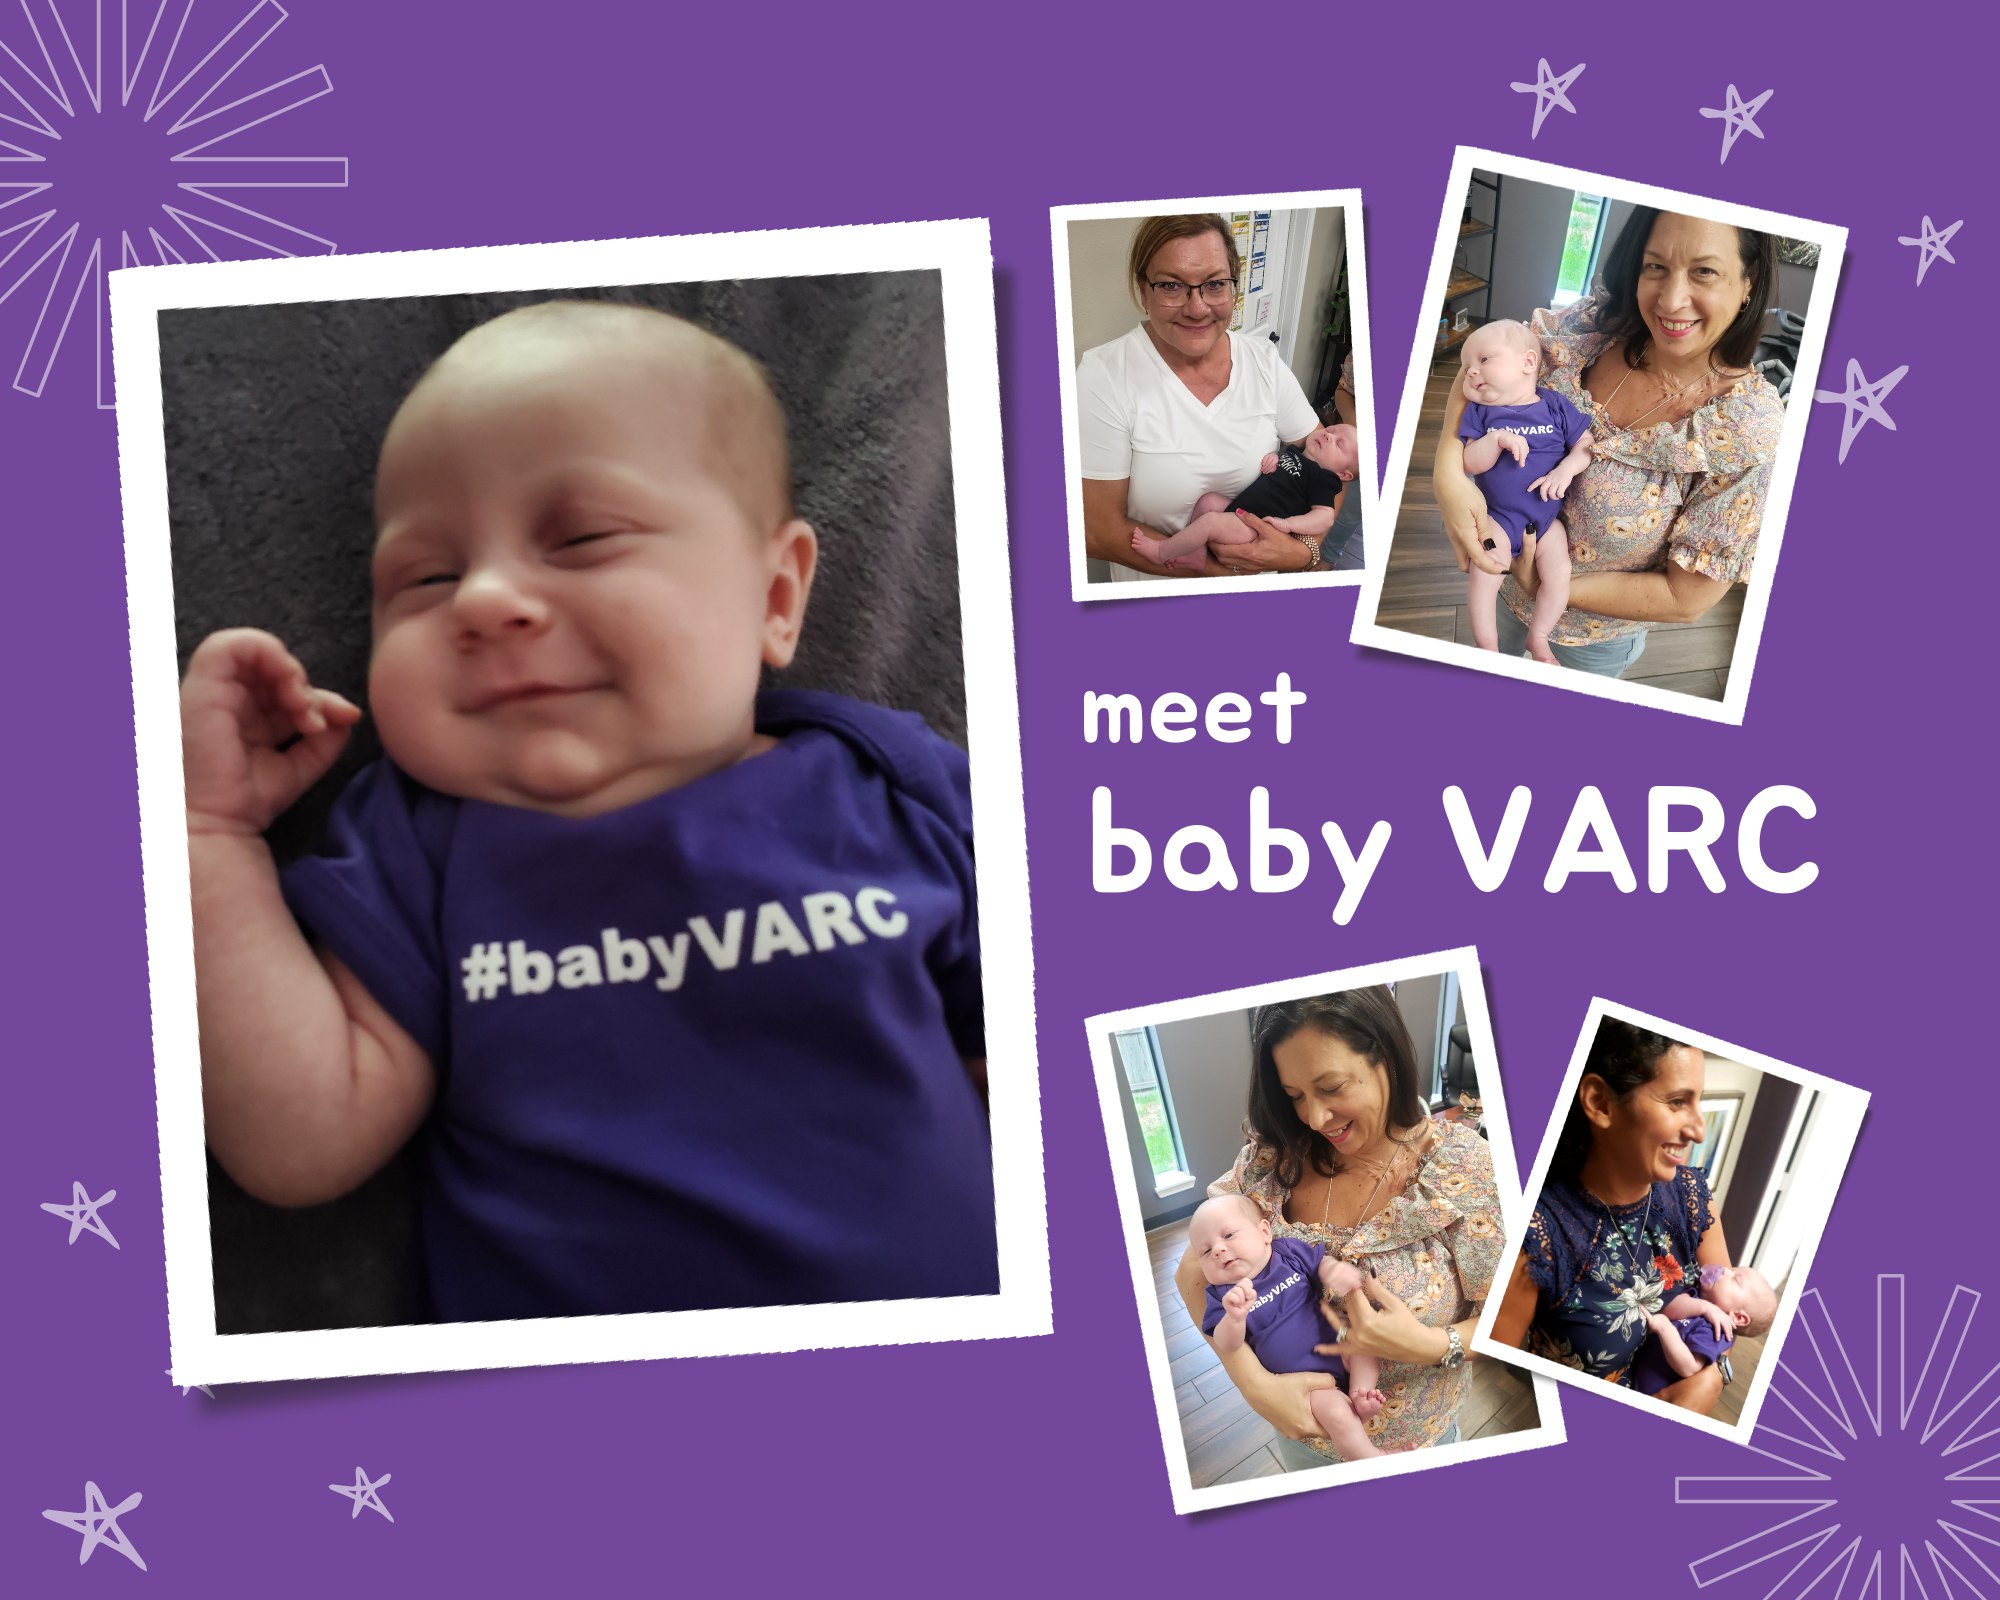 Baby VARC